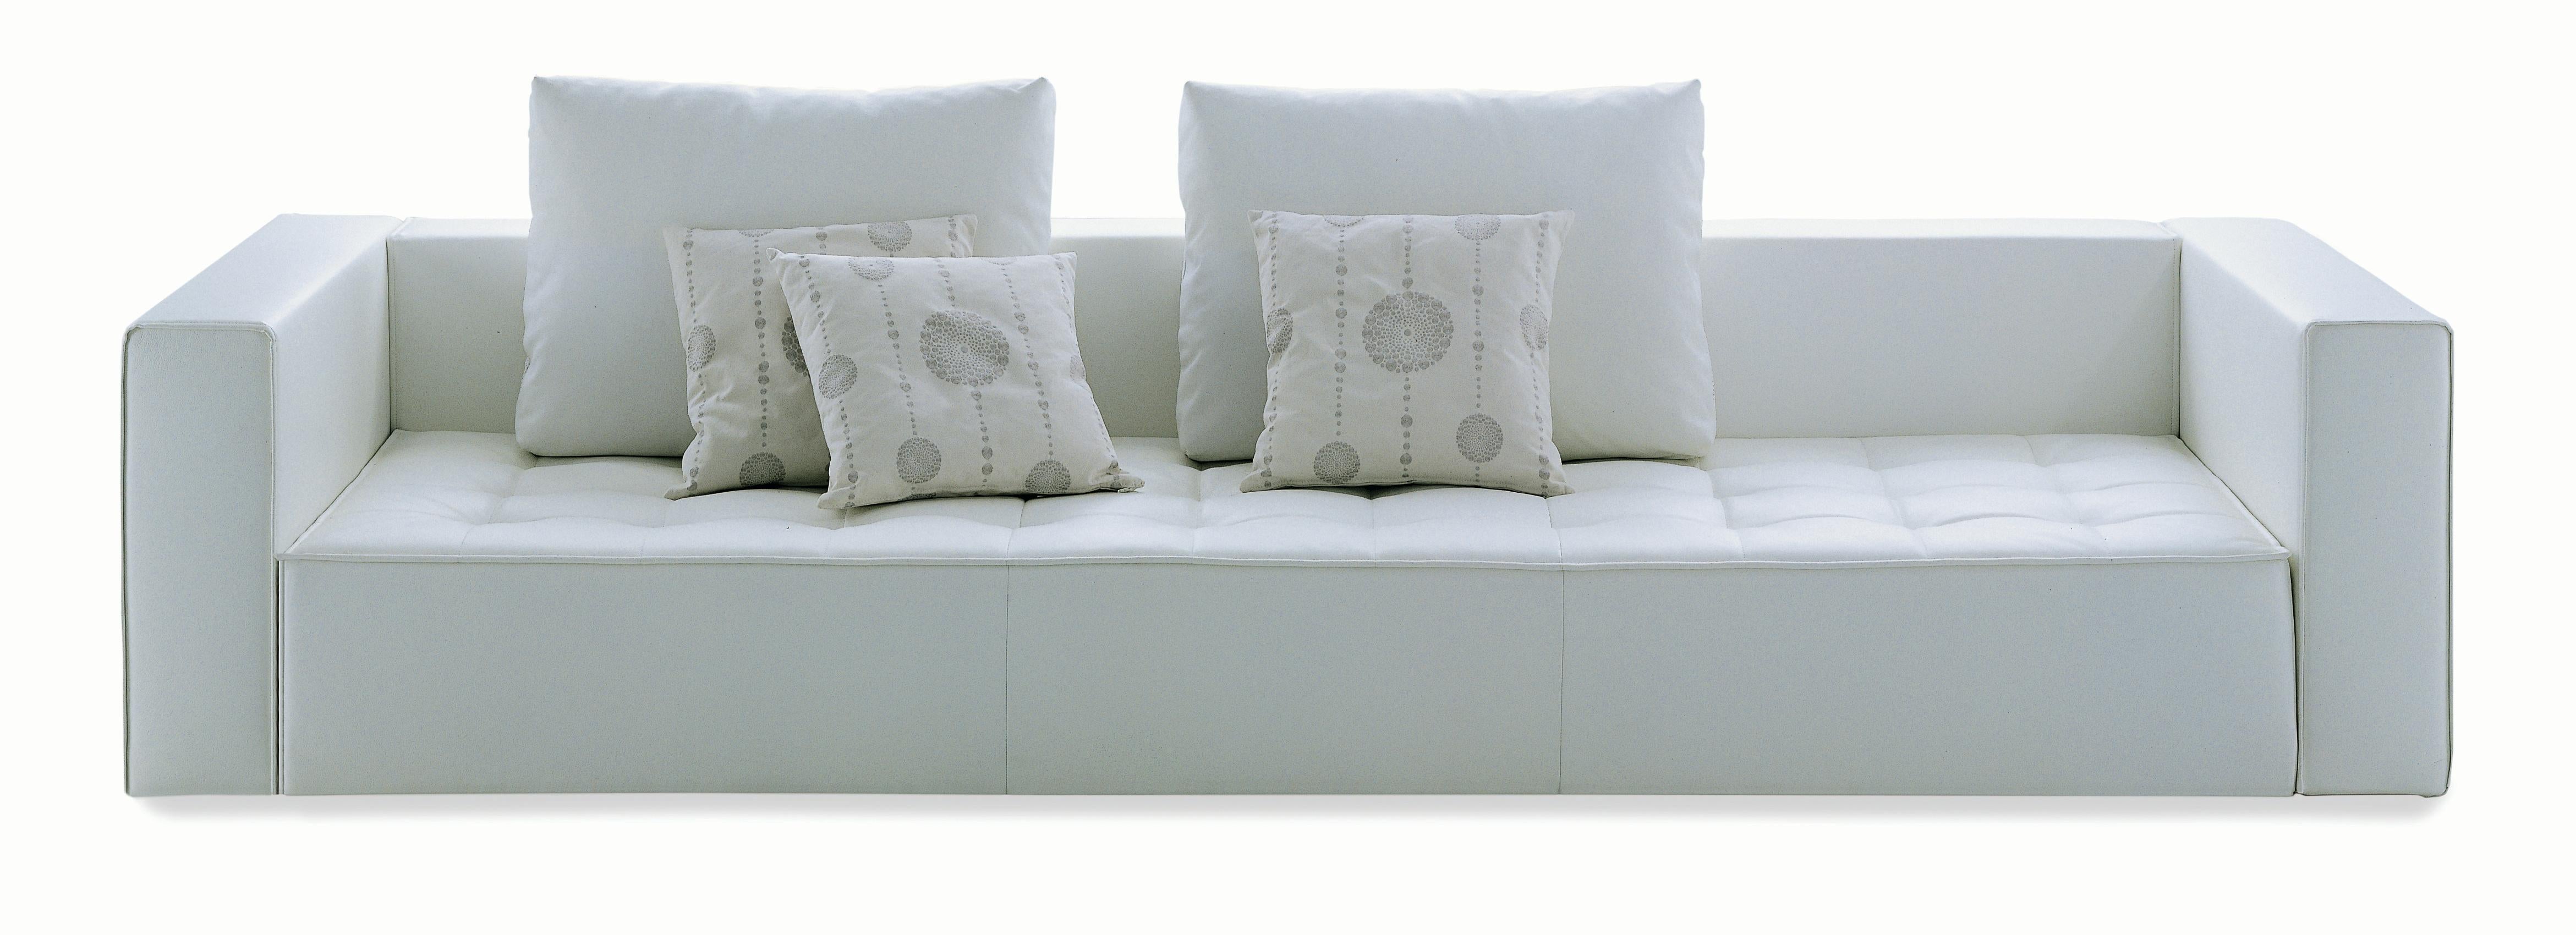 Contemporary Customizable Zanotta Kilt Sofa by Emaf Progetti  For Sale